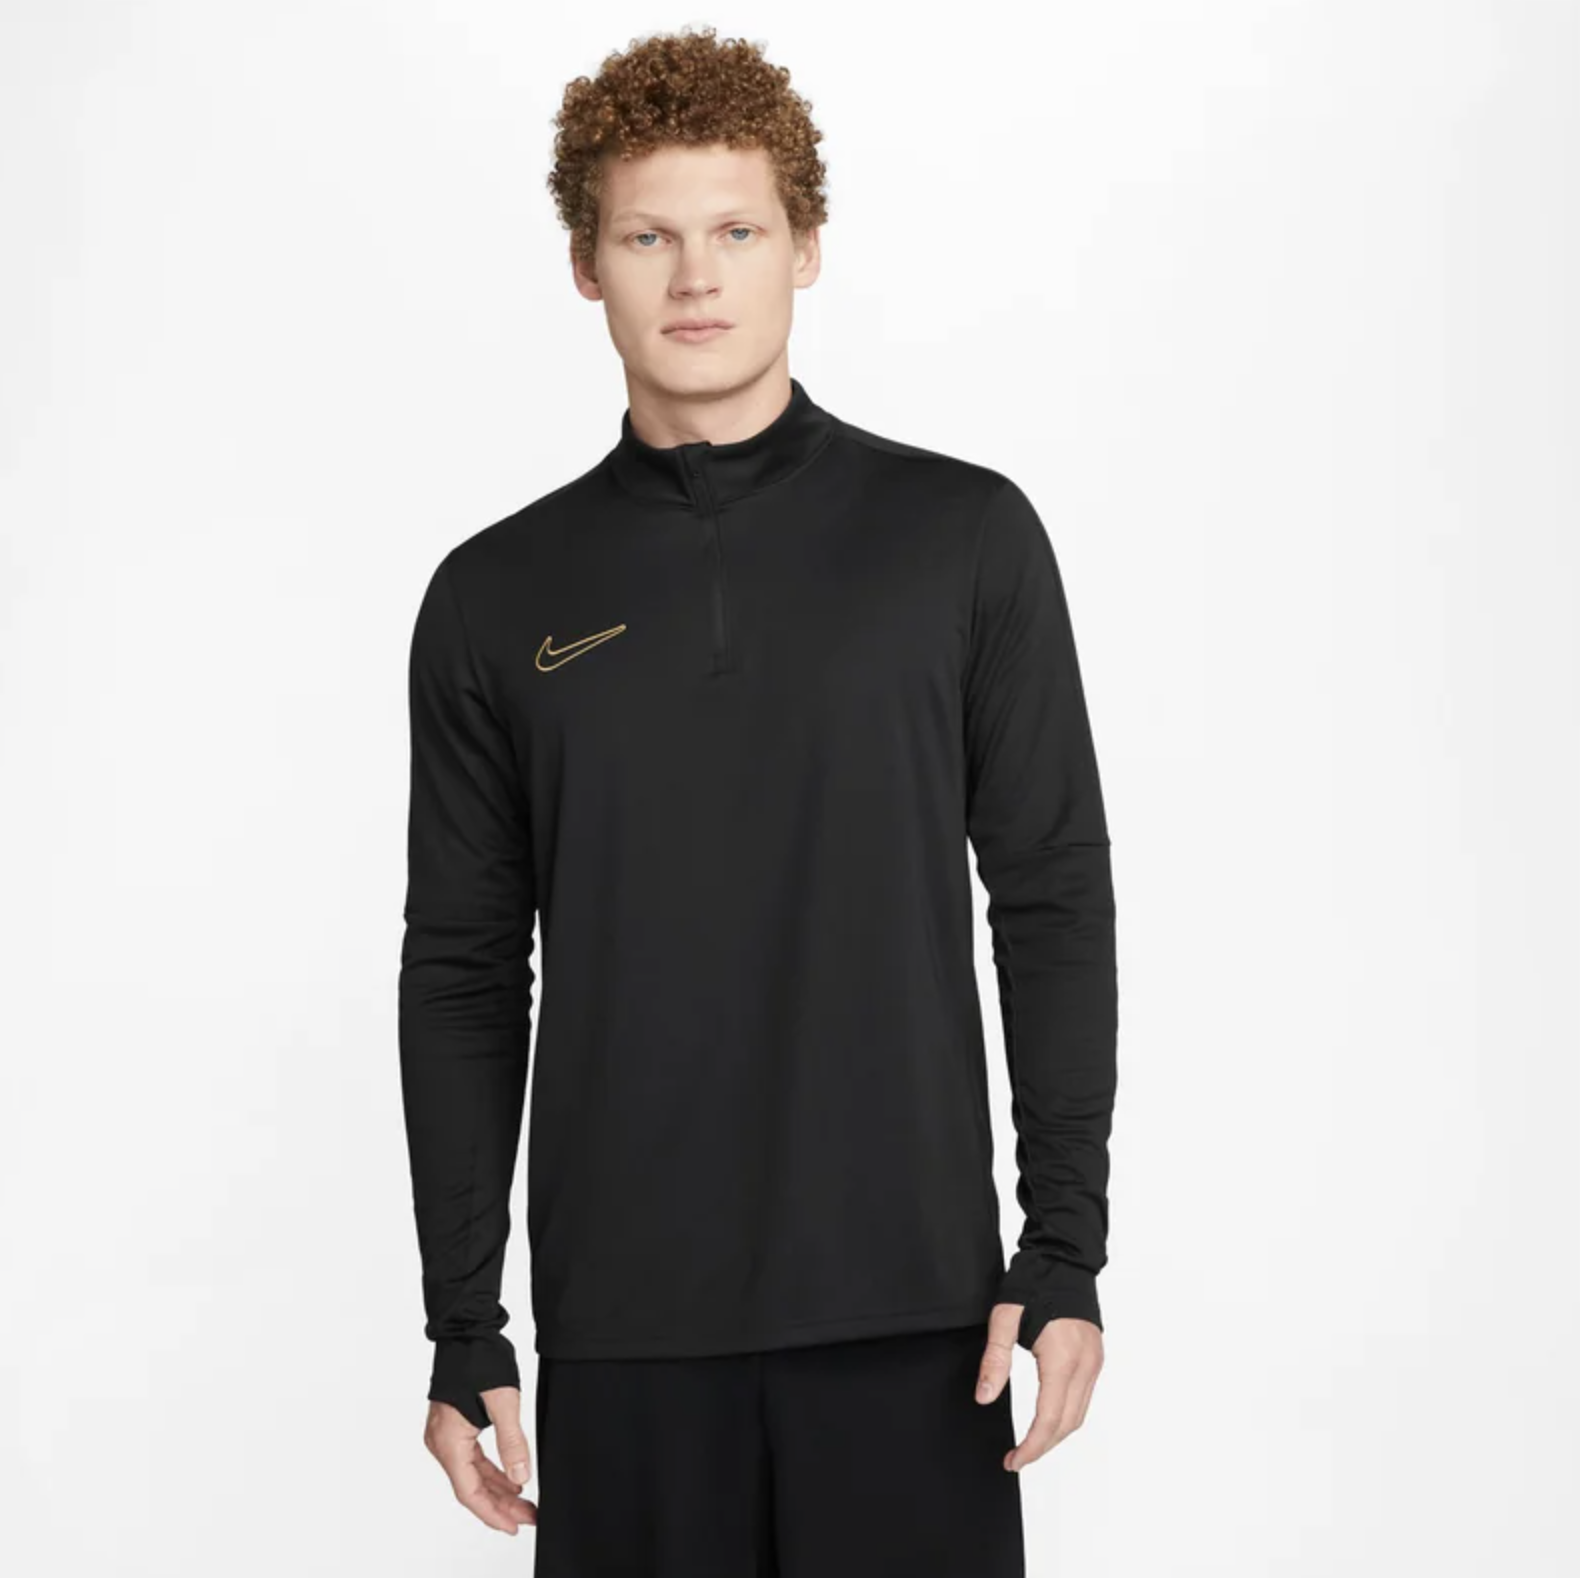 Nike Dri-FIT Academy langarm Fußball Trainingsshirt black/gold